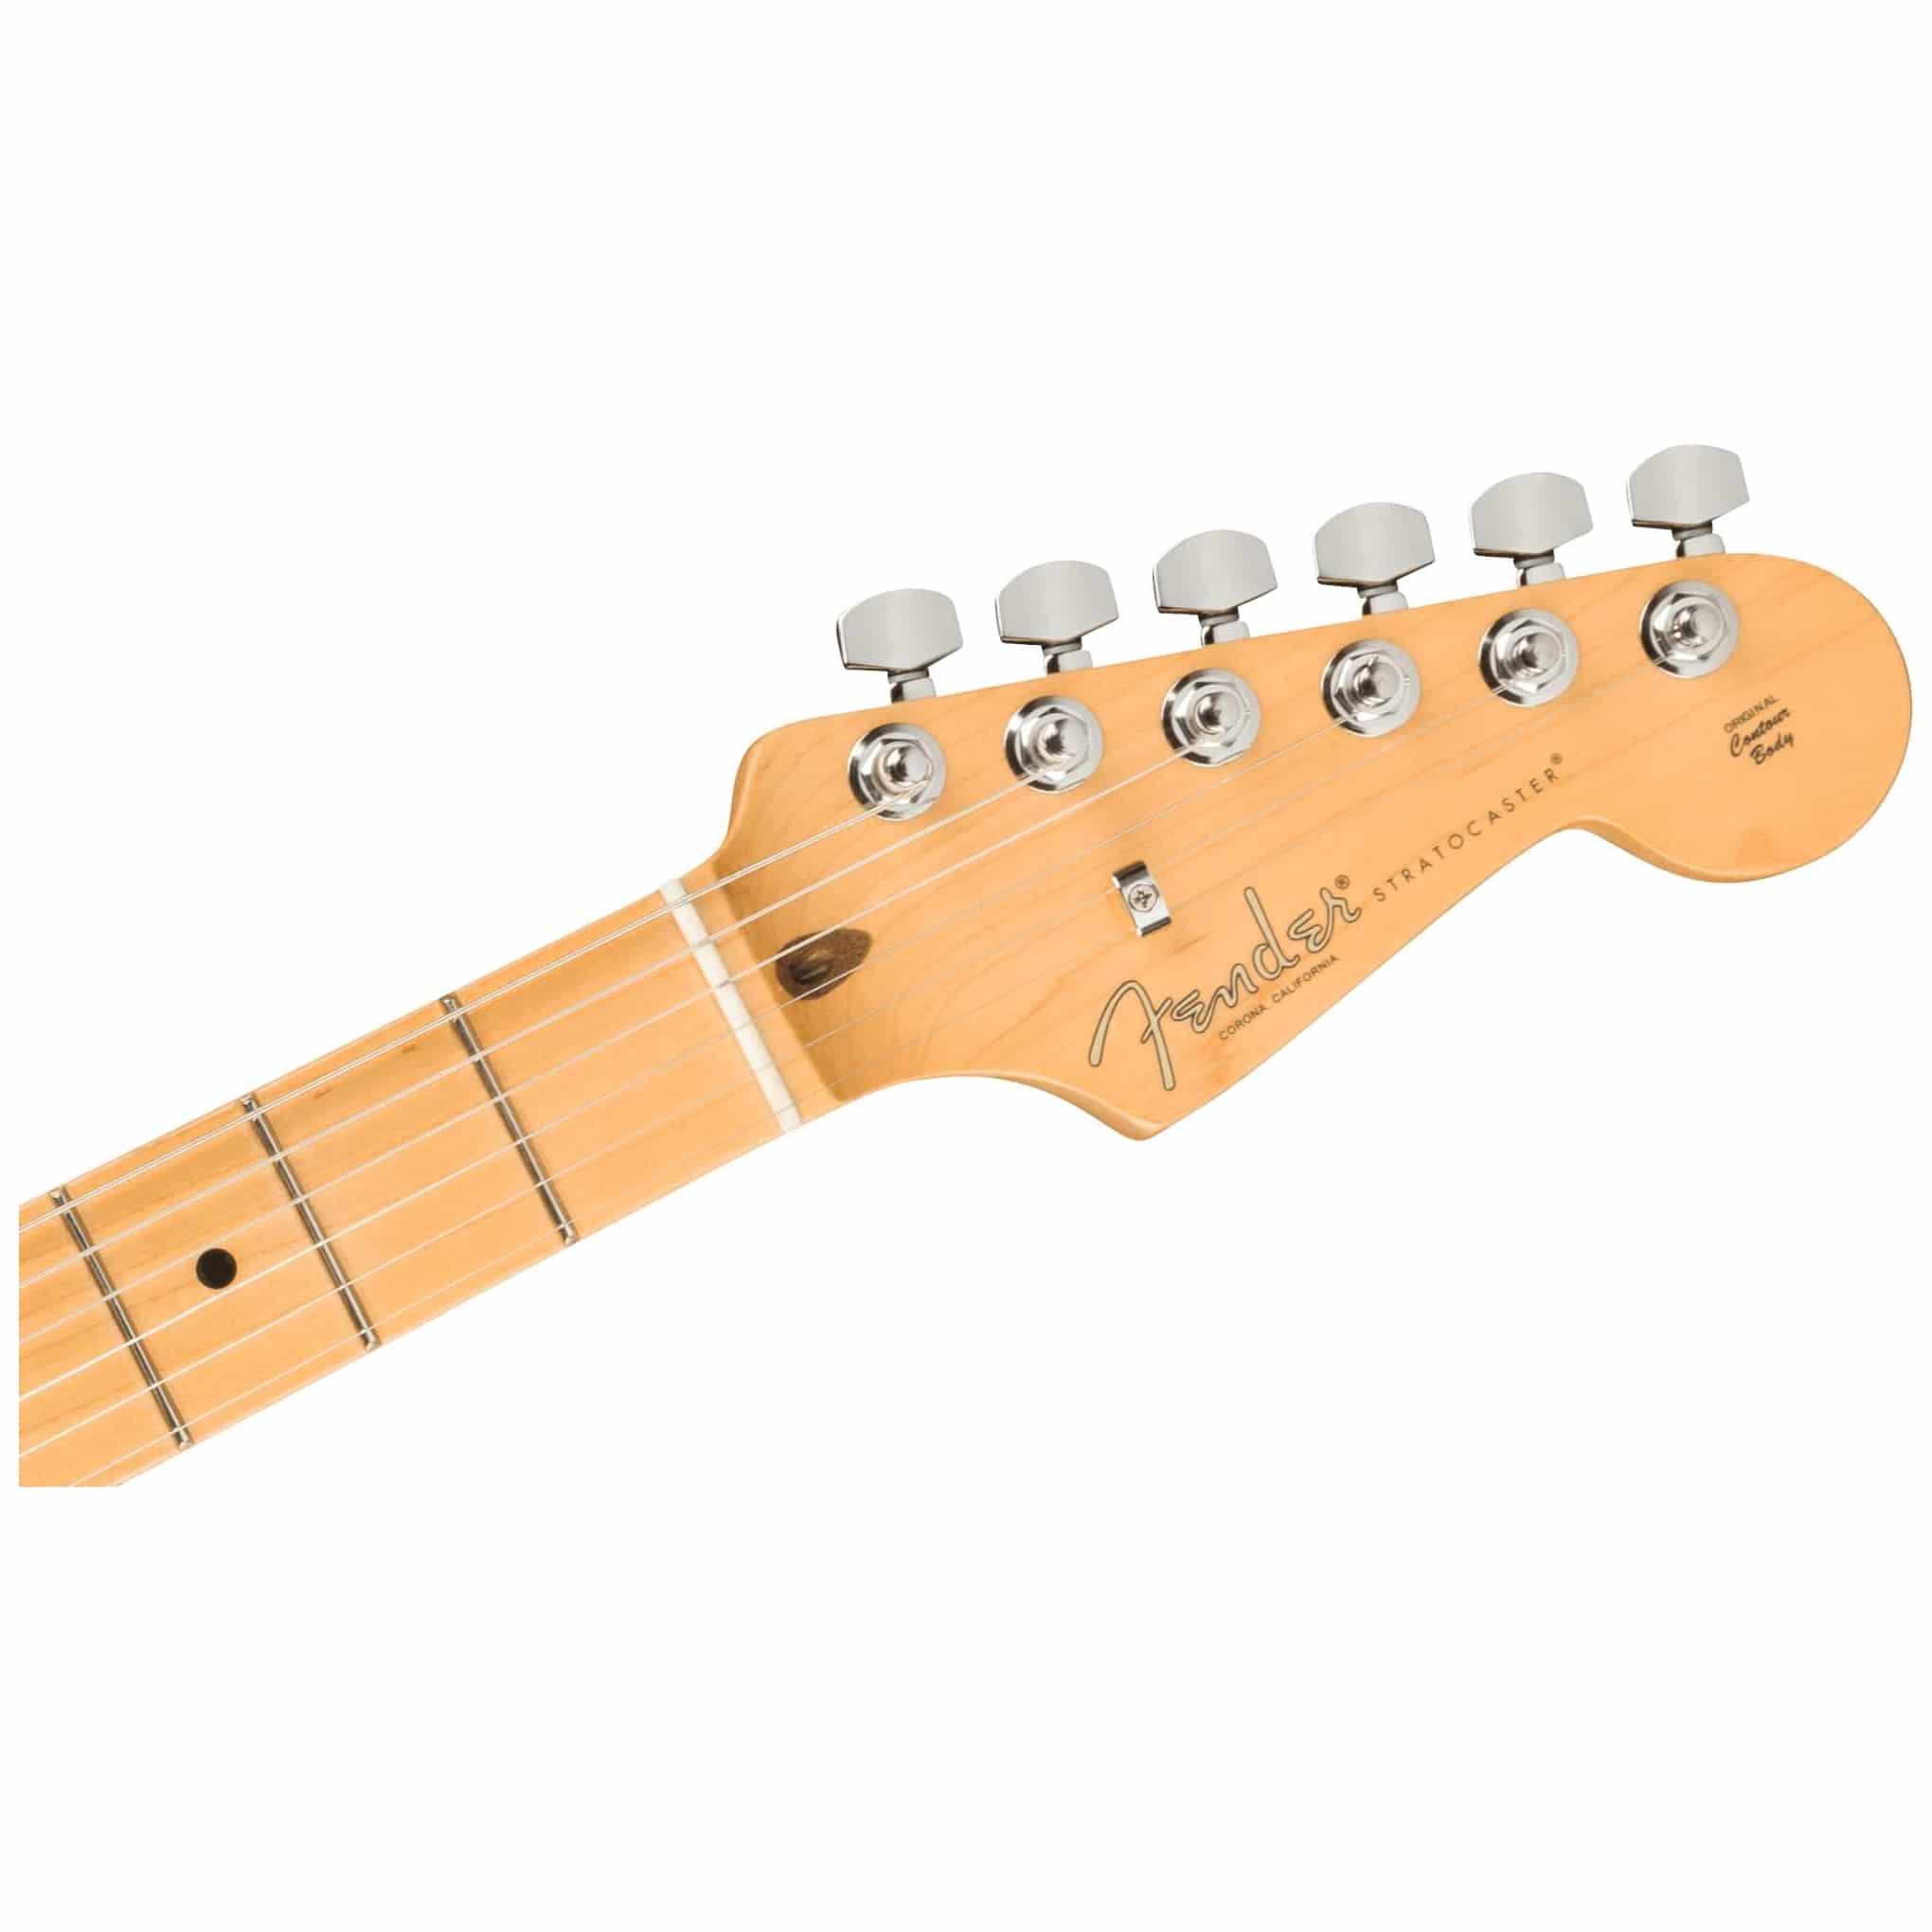 American Pro II Stratocaster MN 3TSB